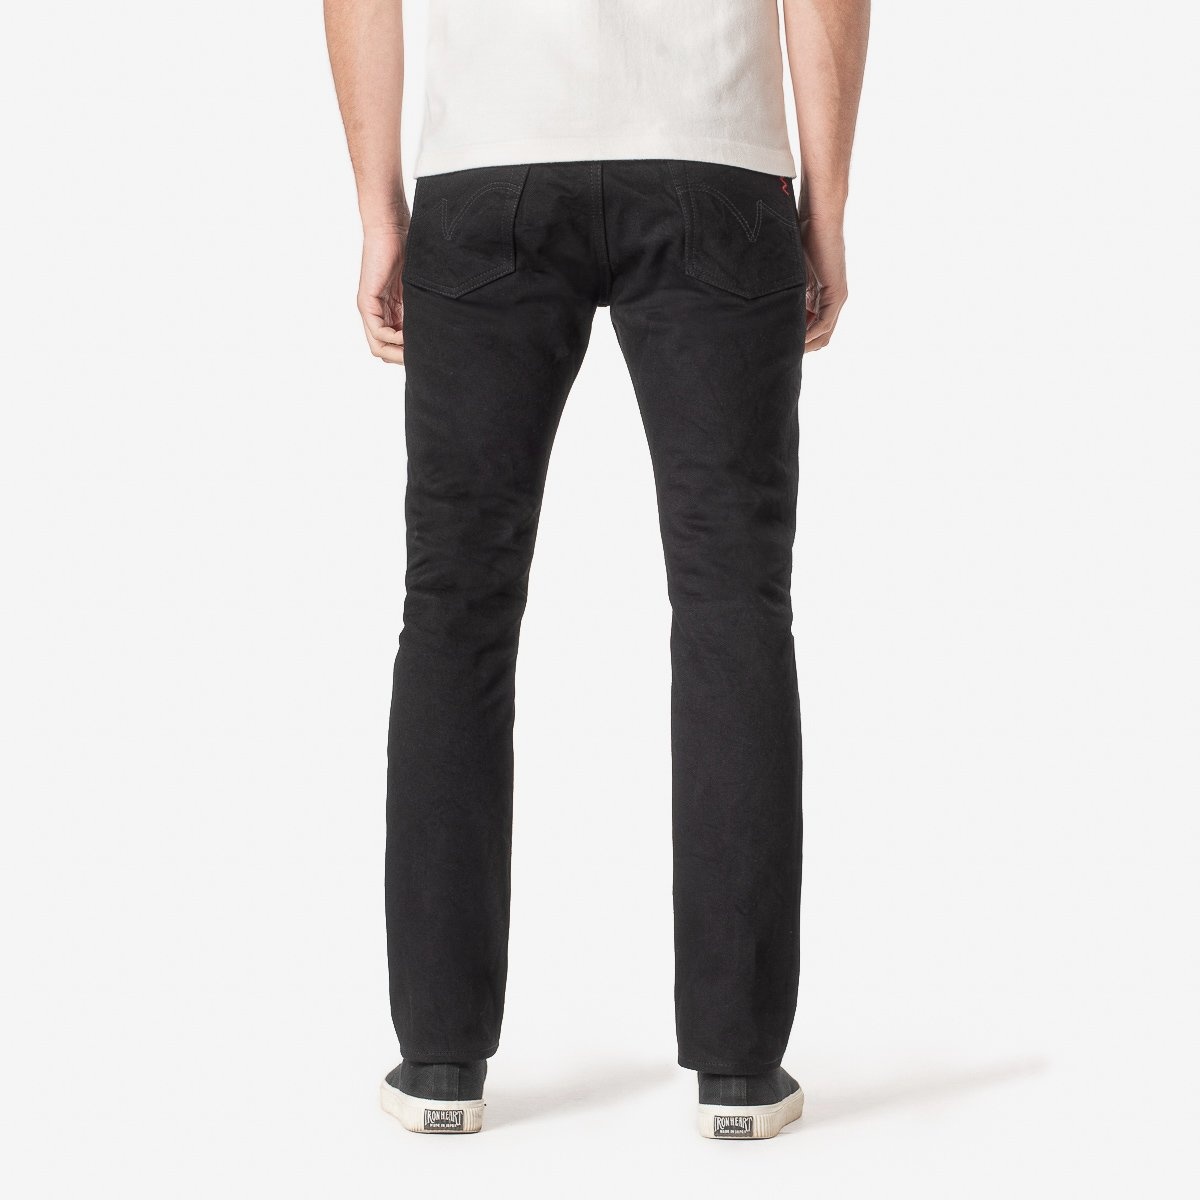 IH-555S-142bb 14oz Selvedge Denim Super Slim Cut Jeans - Black/Black - 3